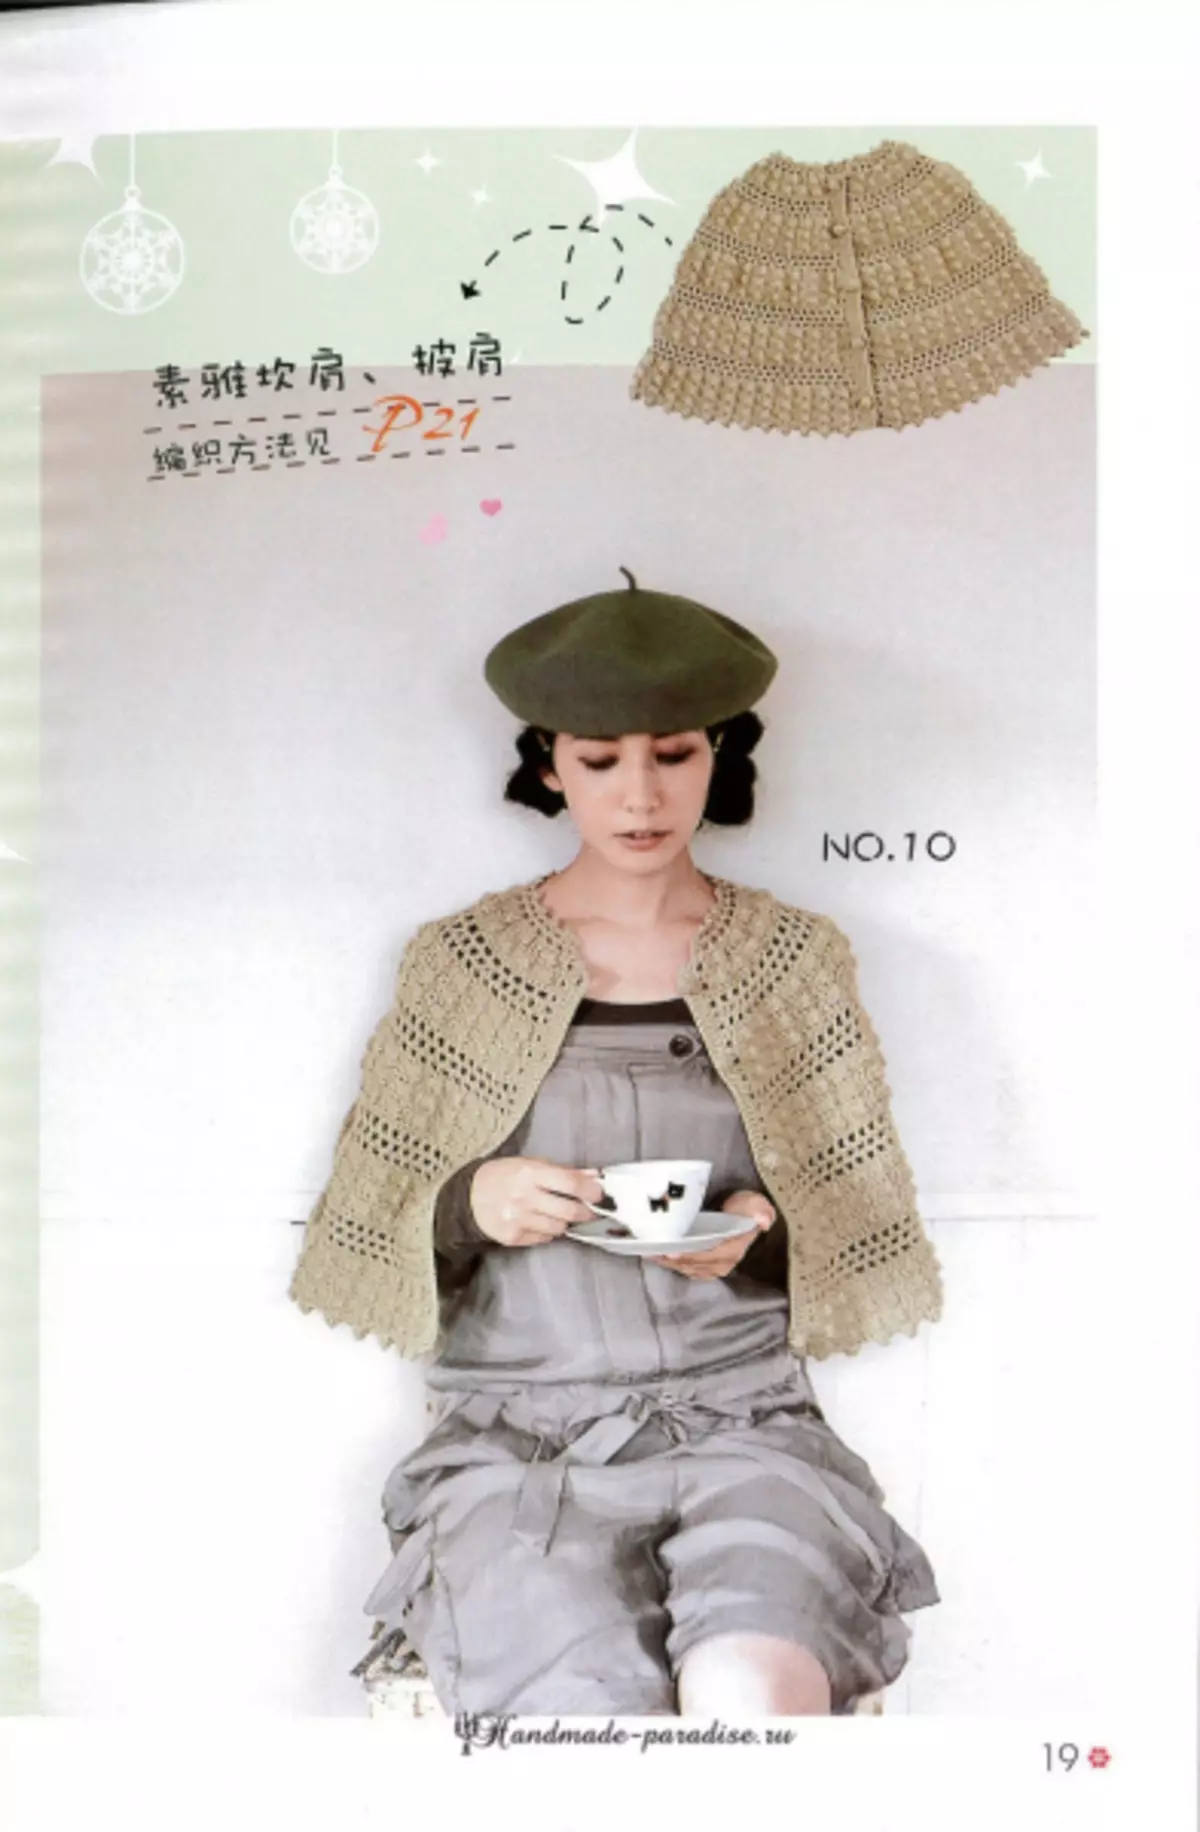 Shawli, פונצ'ו וכפפים במגזין יפני עם תוכניות